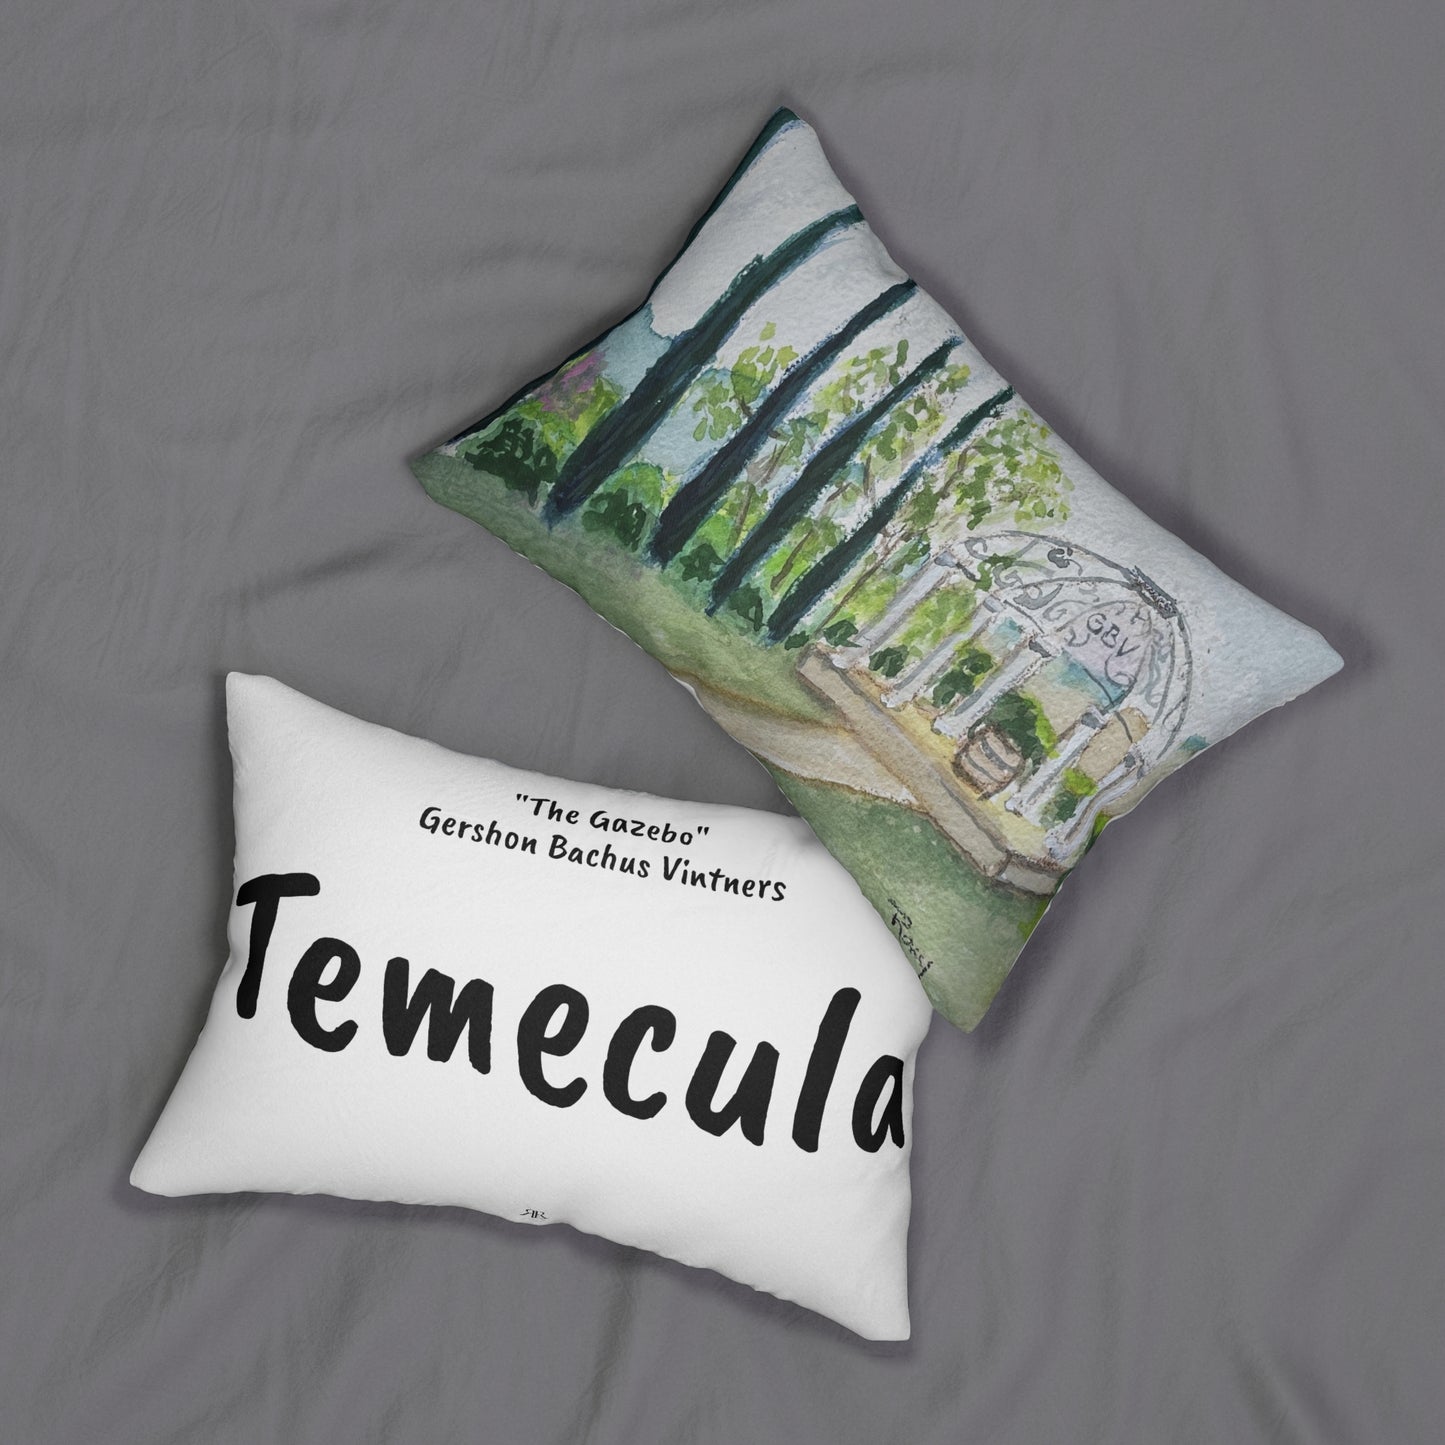 Temecula Lumbar Pillow featuring "The Gazebo" at Gershon Bachus Vintners painting and "Temecula"